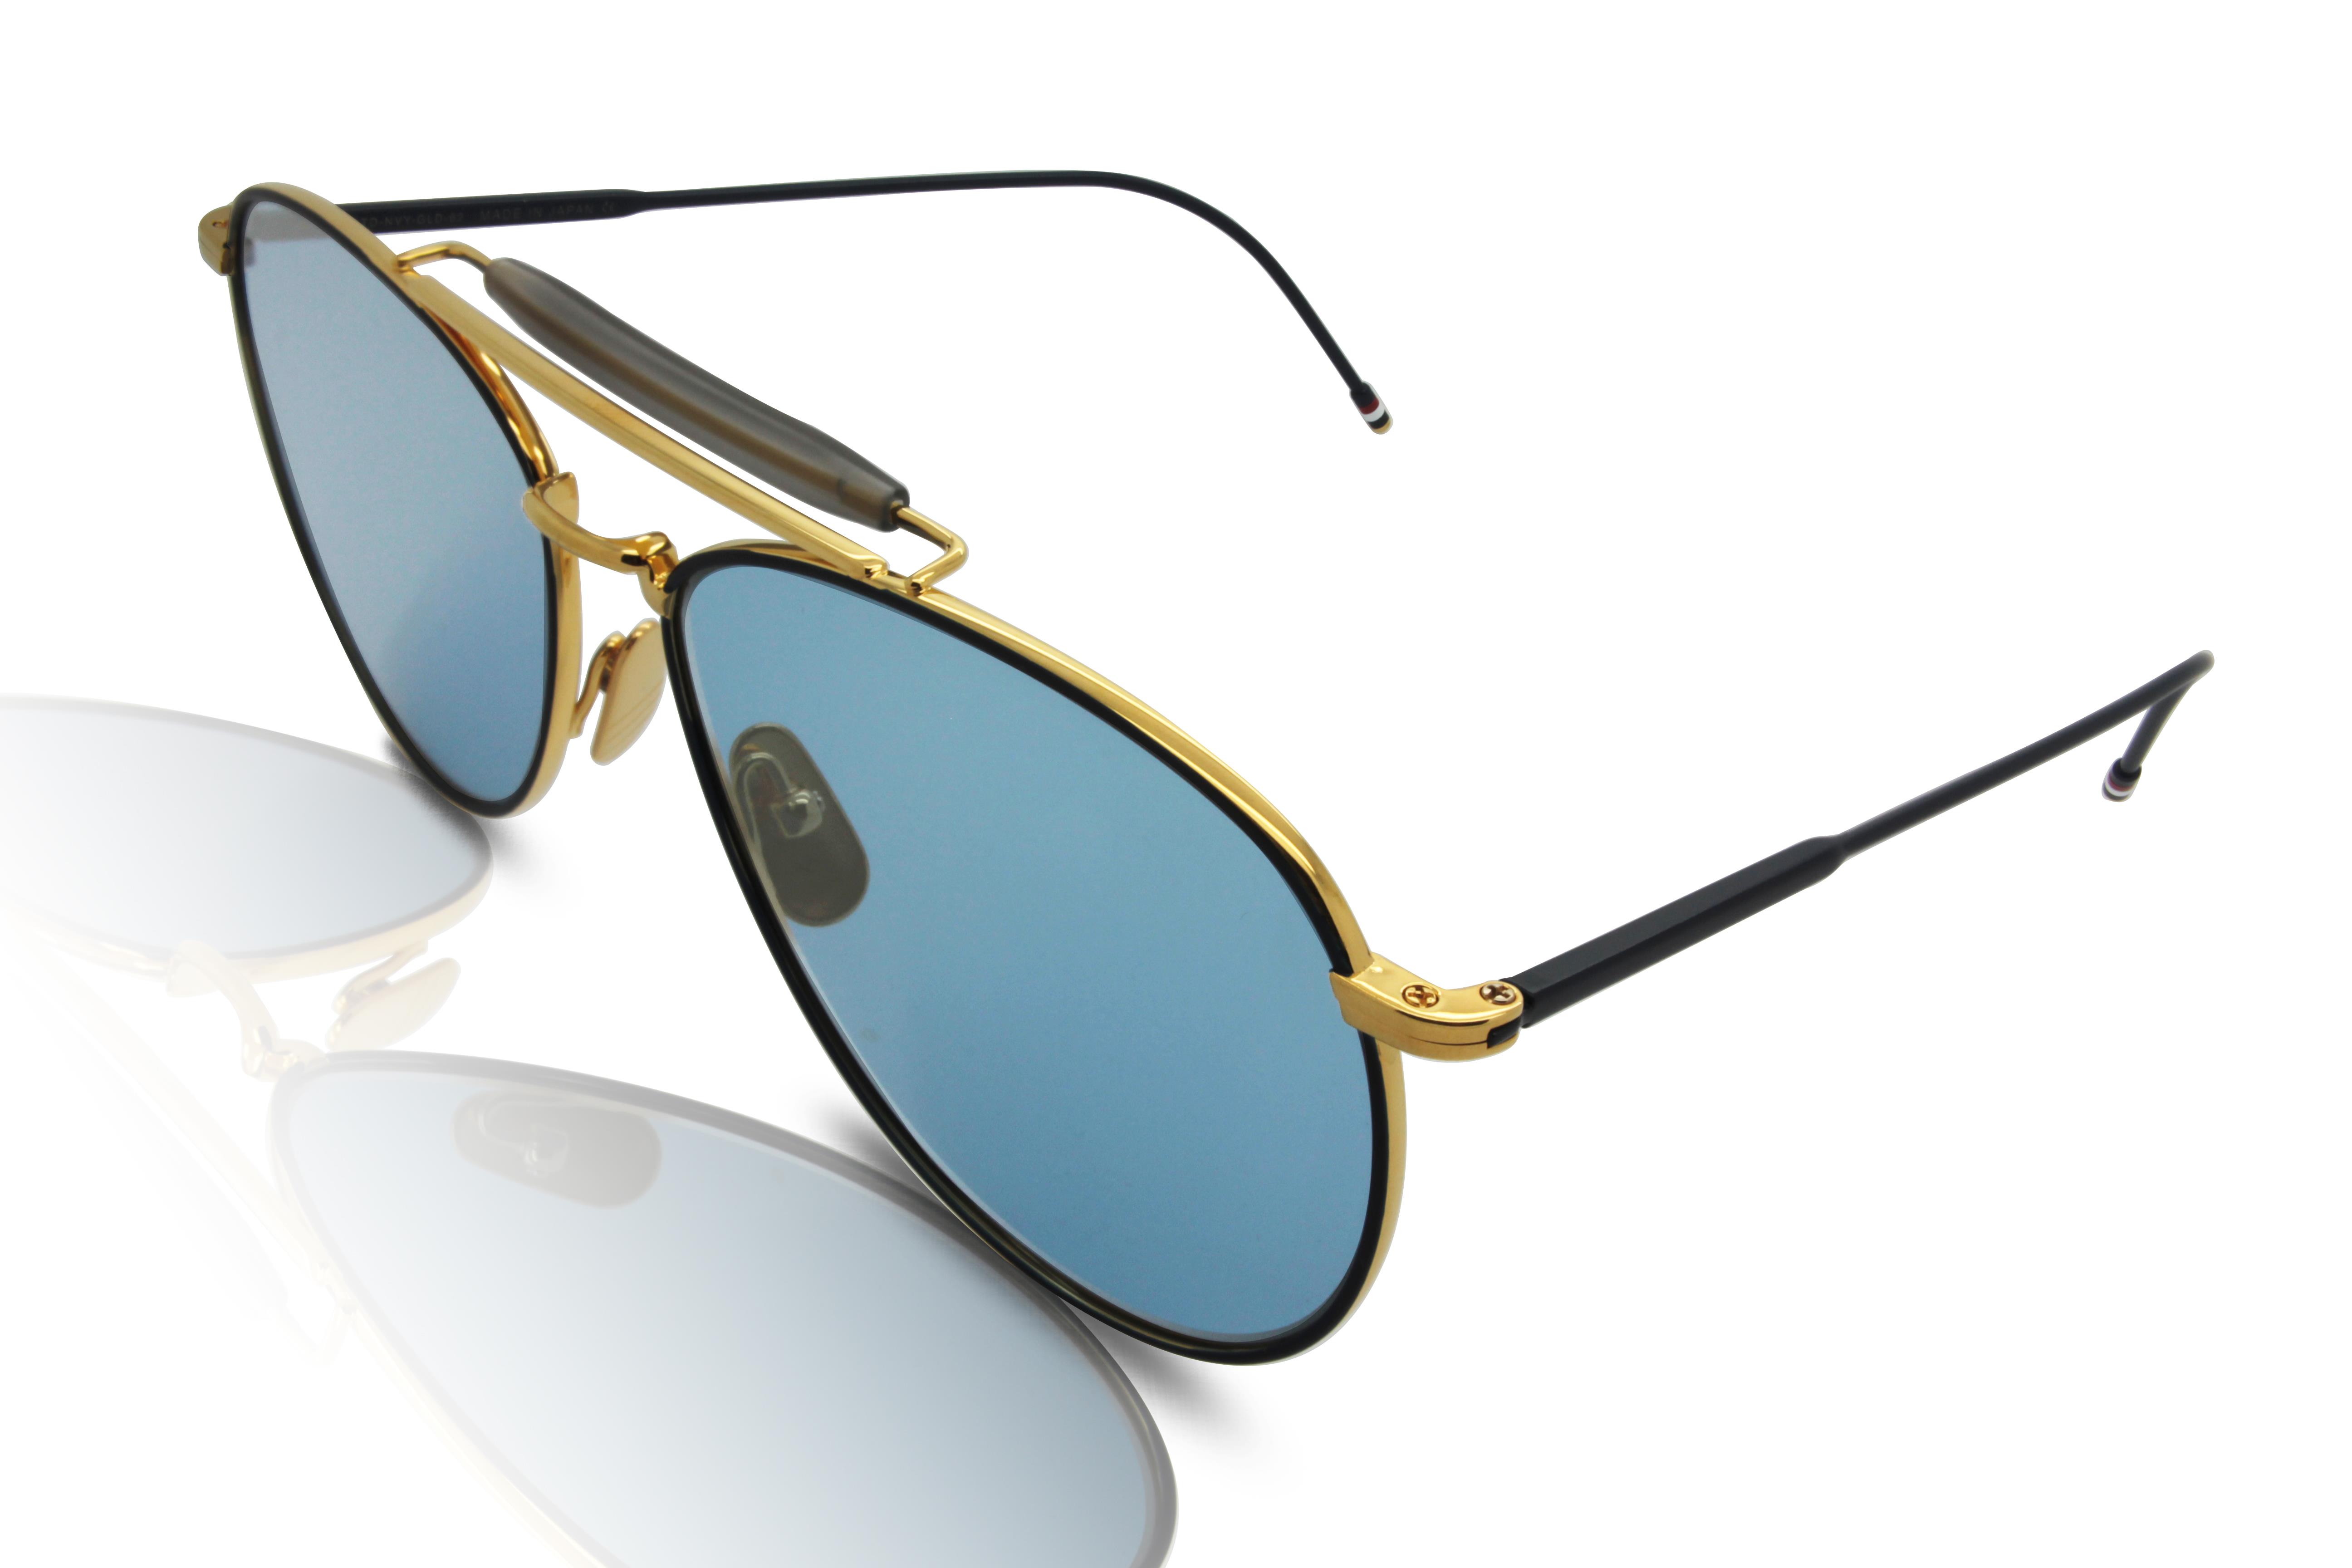 Thom Browne TB-015-LTD Sunglasses NVY-GLD -Gold/Matte Navy/Blue